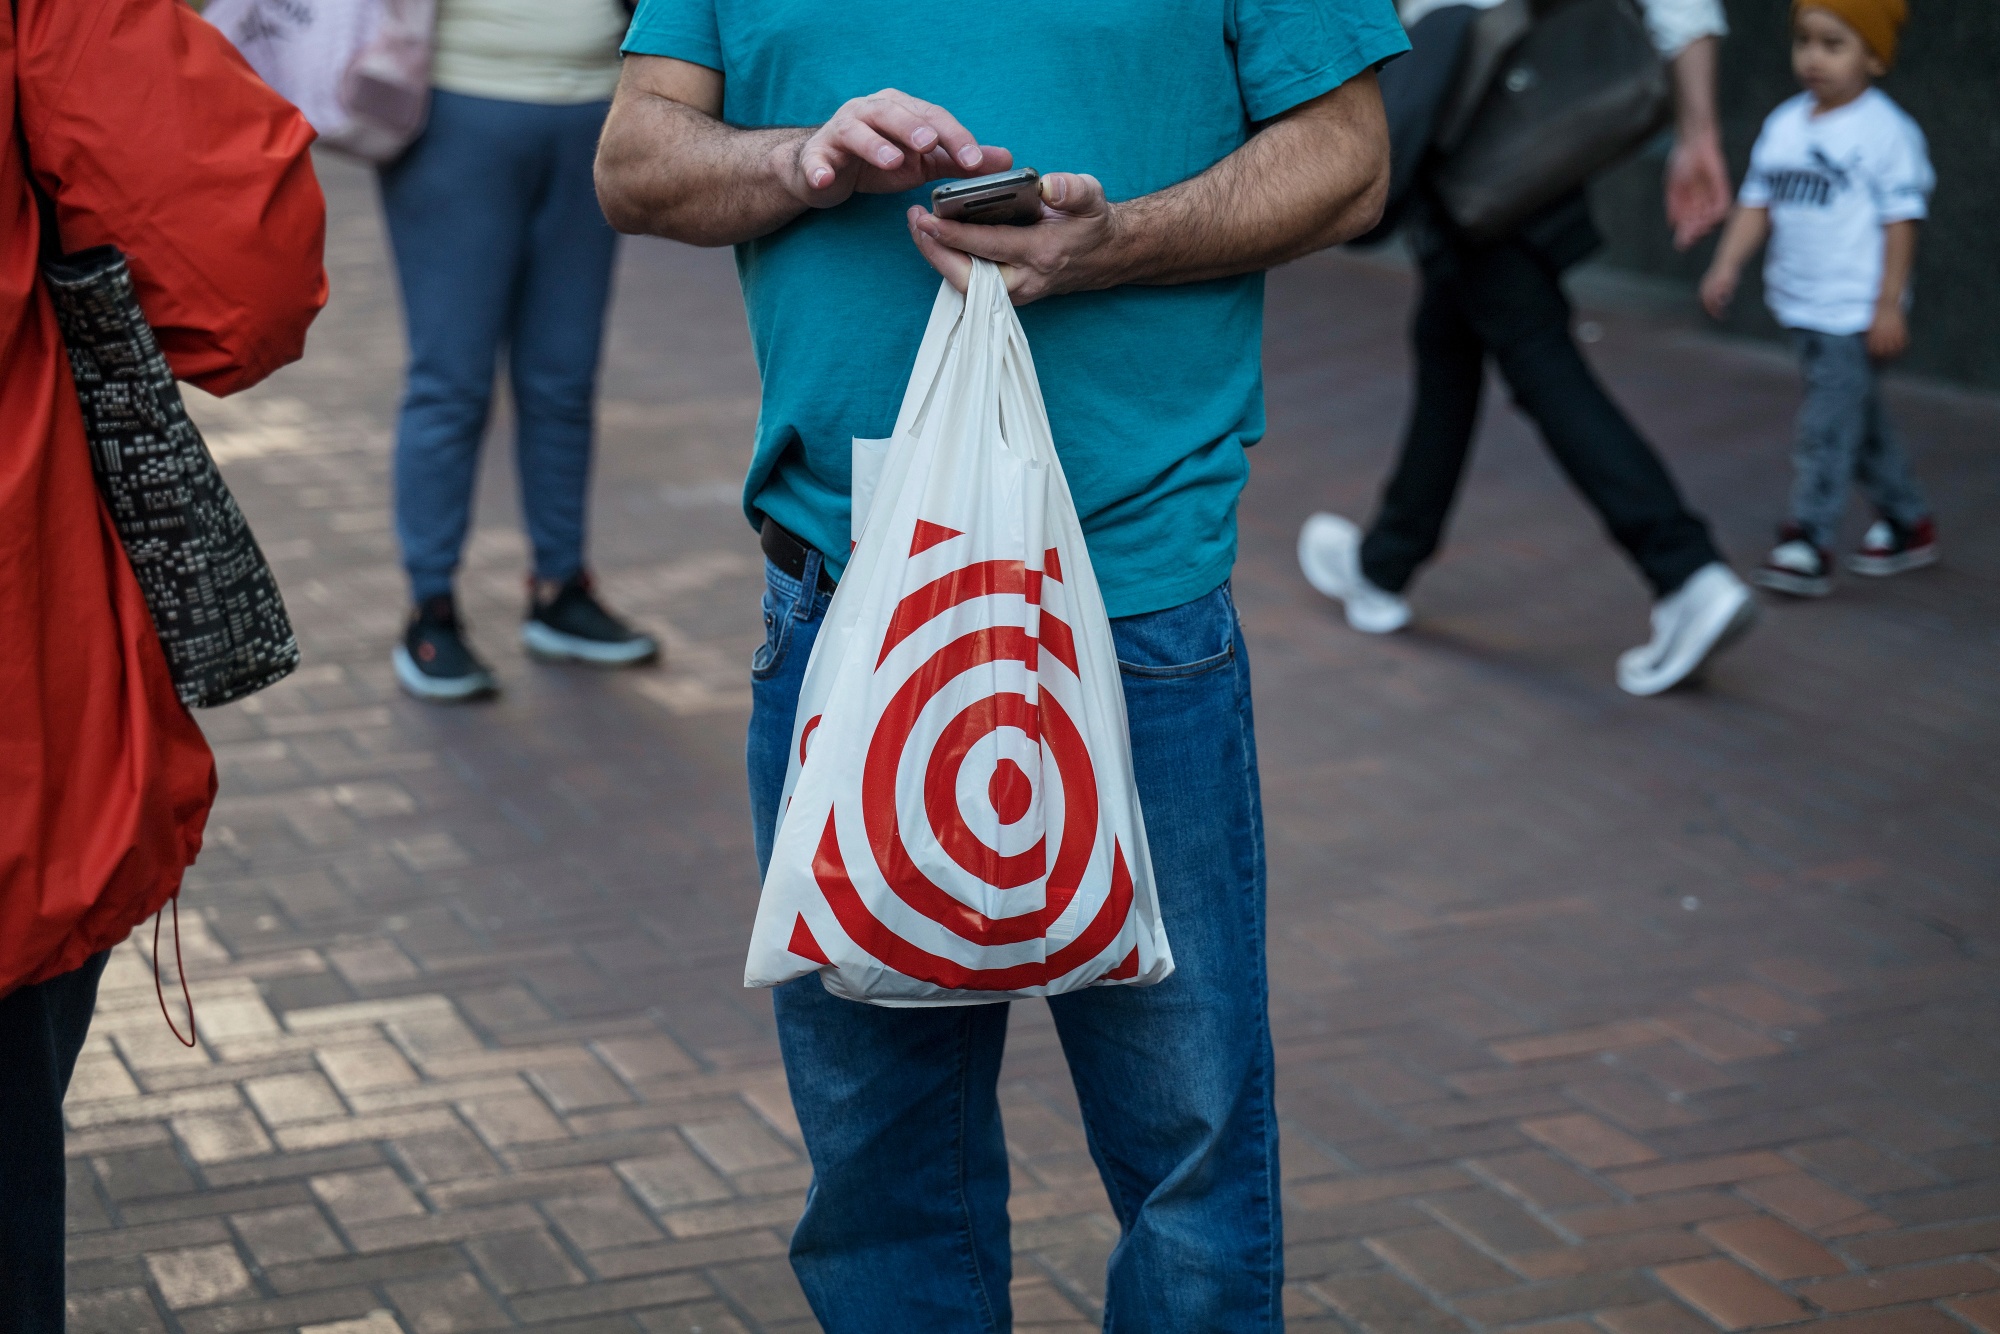 A pedestrian holding a Target Corp. shopping bag uses a mobile phone in San Francisco, California.